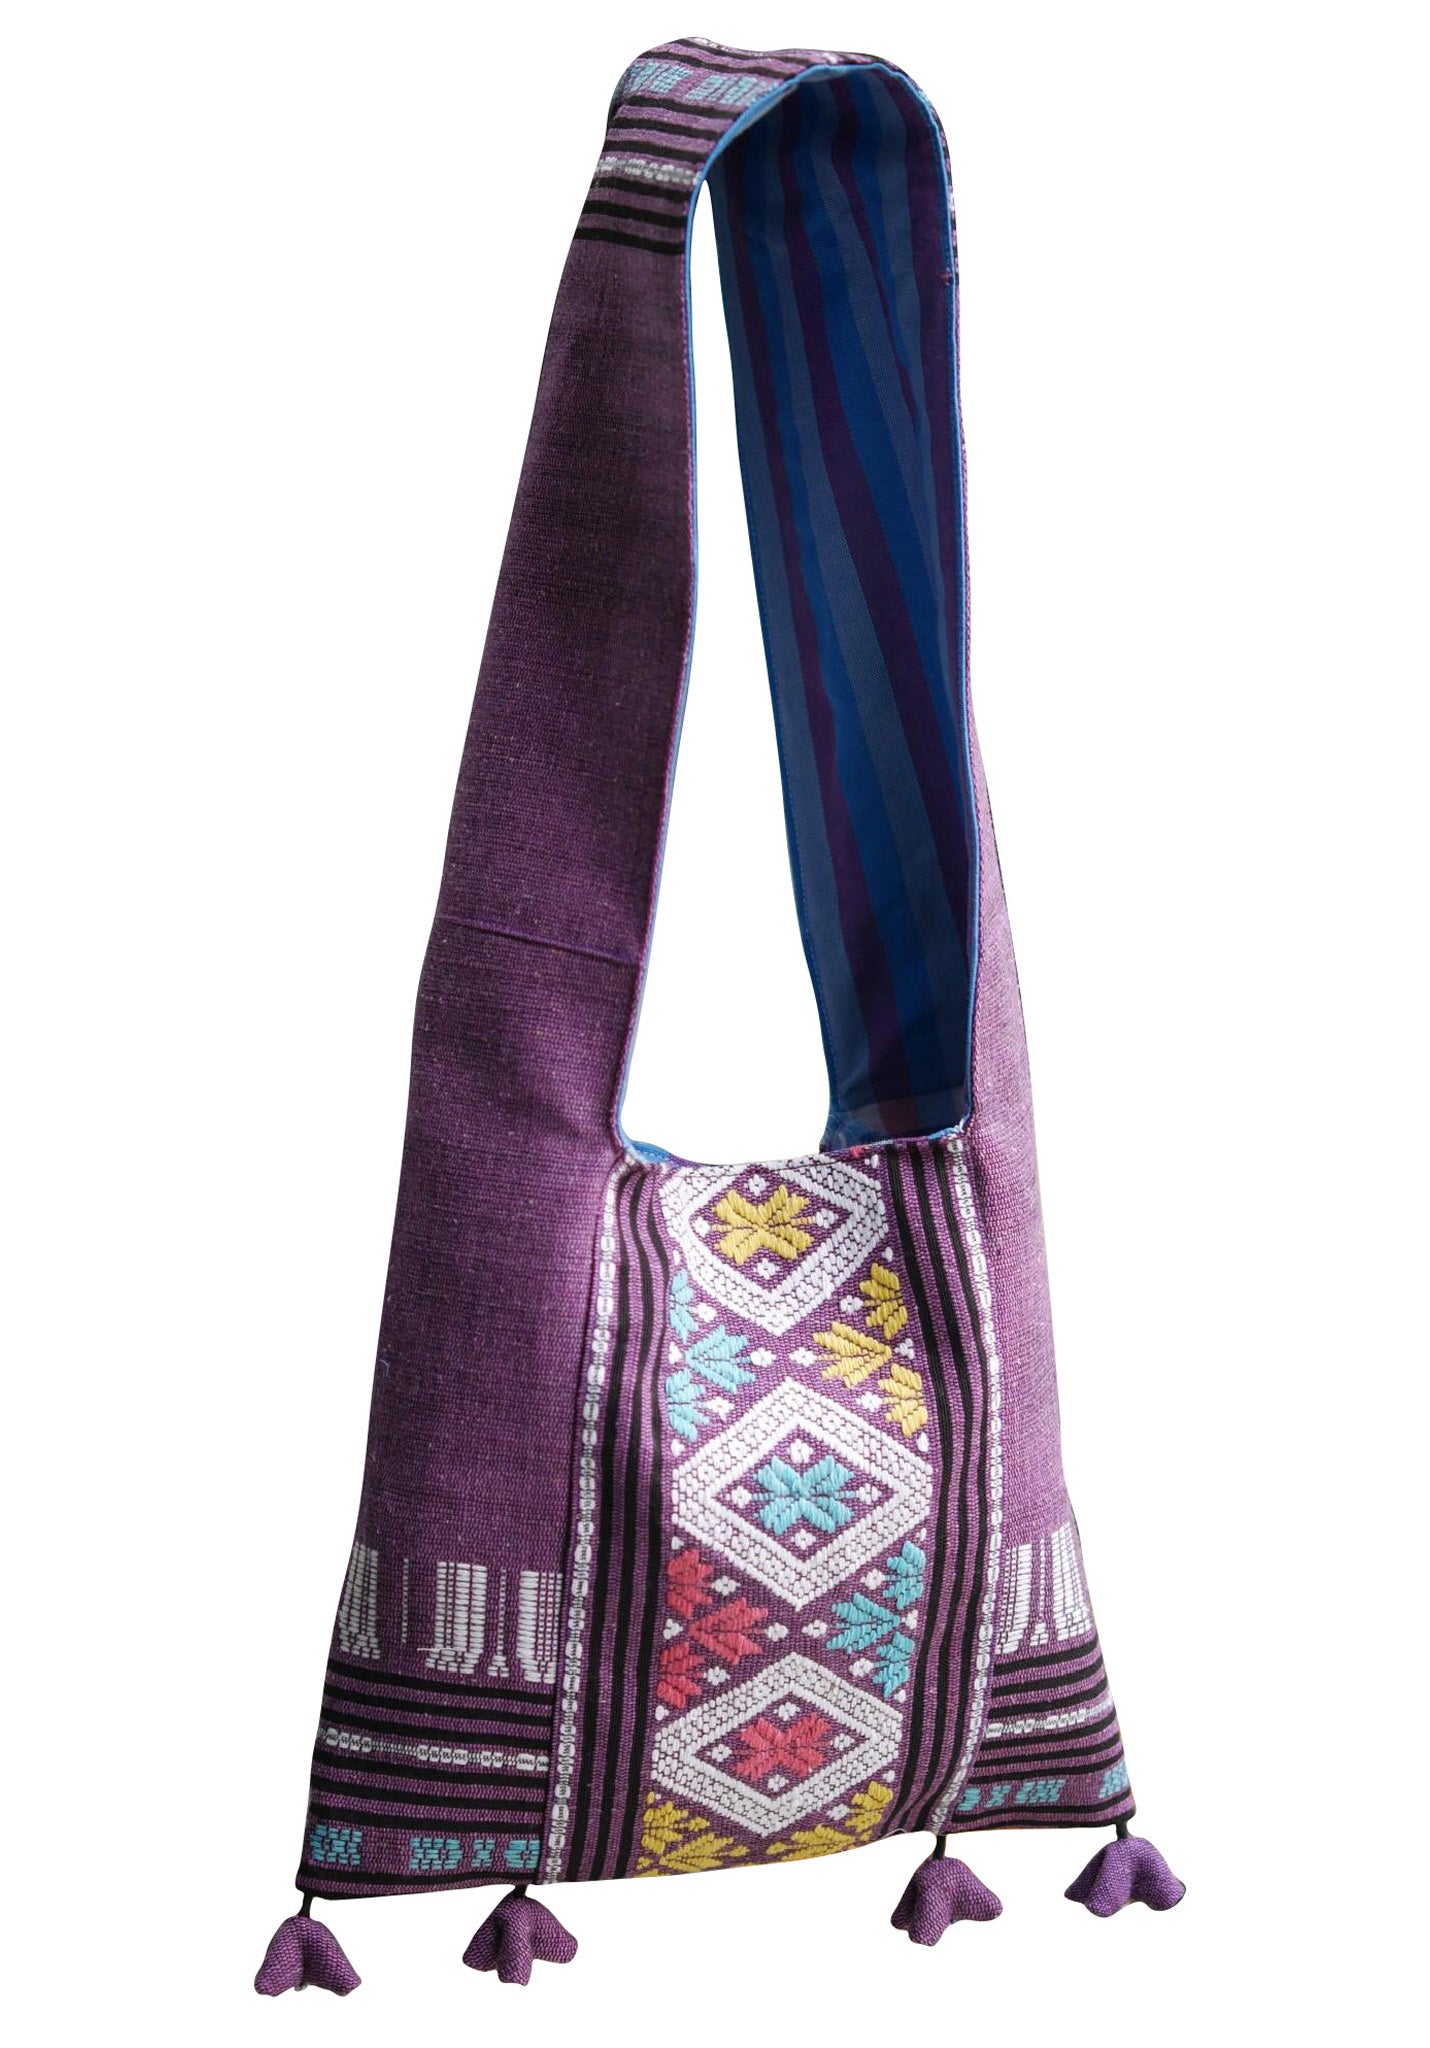 Handwoven Hand-dyed Handmade ETHNICS MINI shoulder bag tote bag Sunne Tropical - PURPLE MAUVE